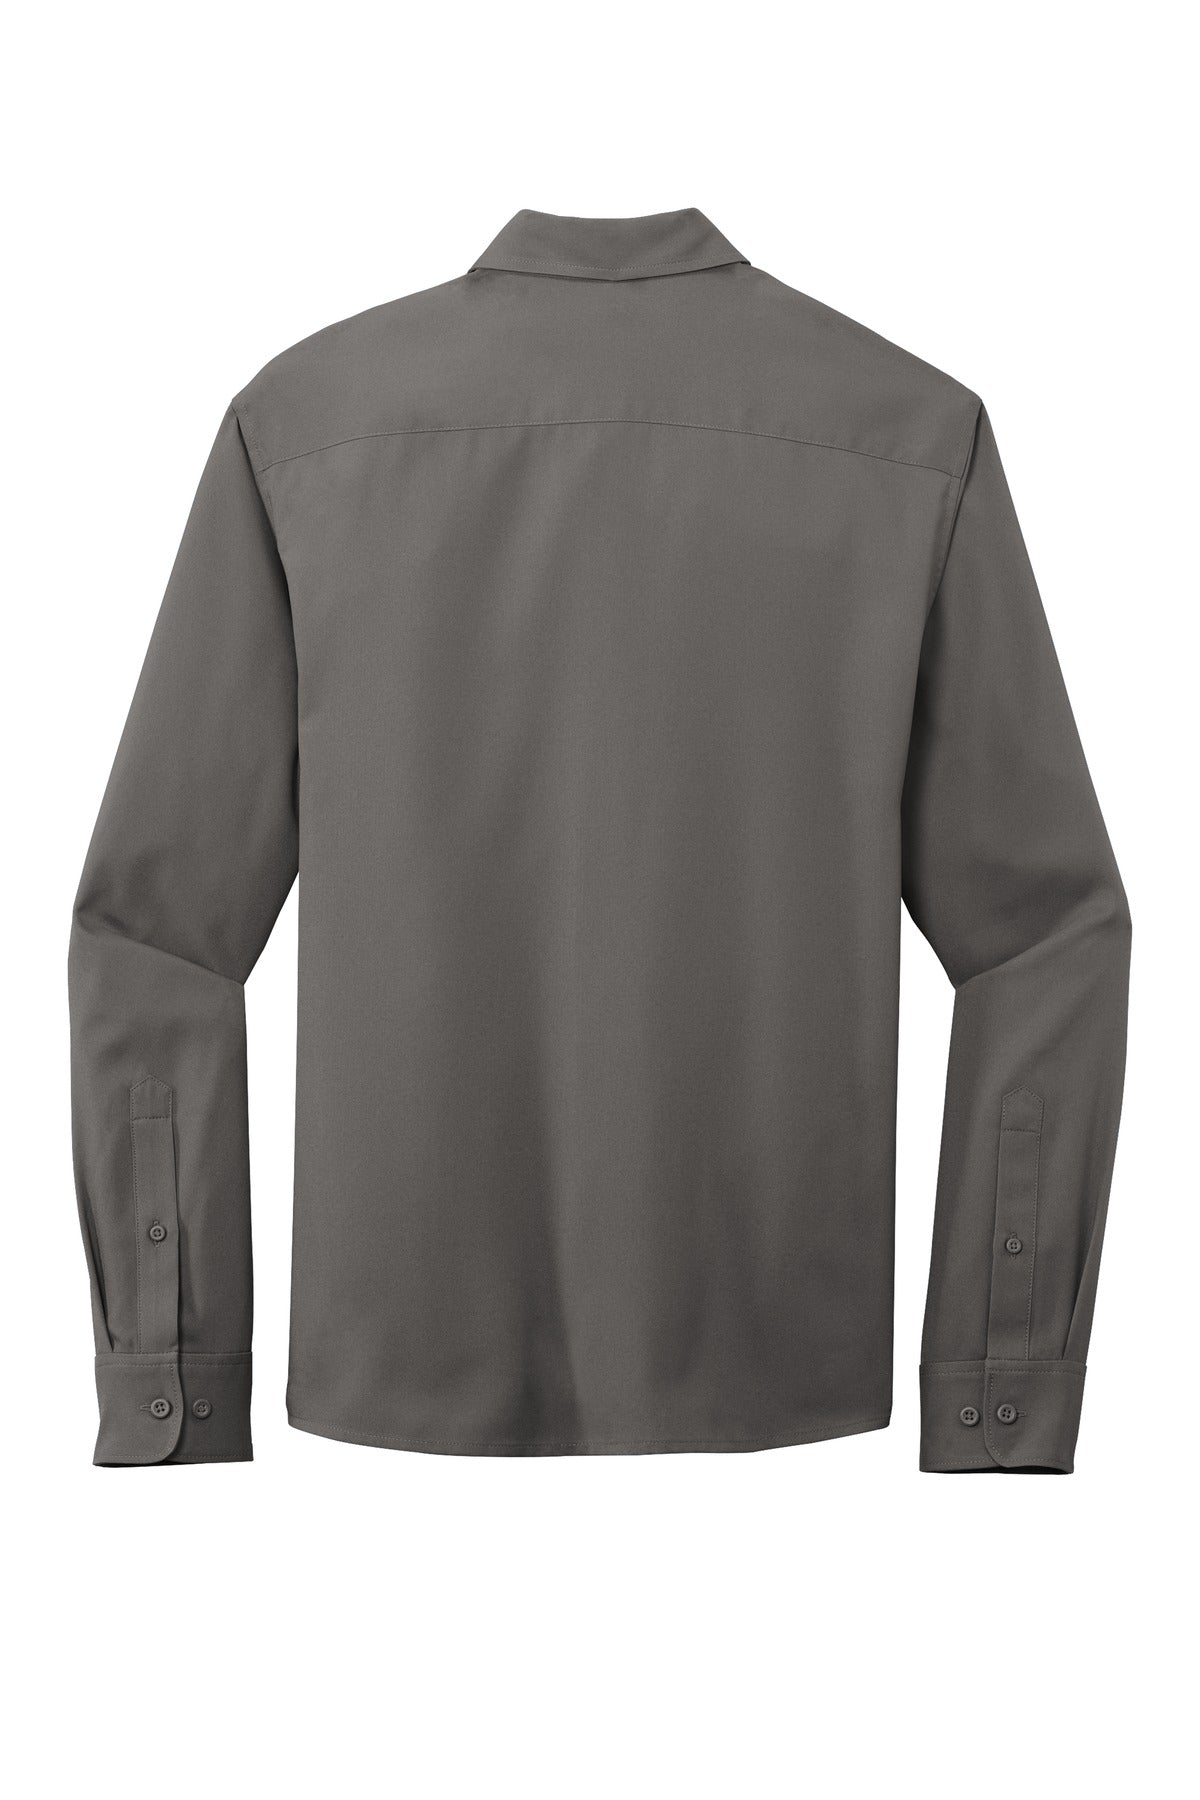 Port Authority Long Sleeve Performance Staff Shirt W401